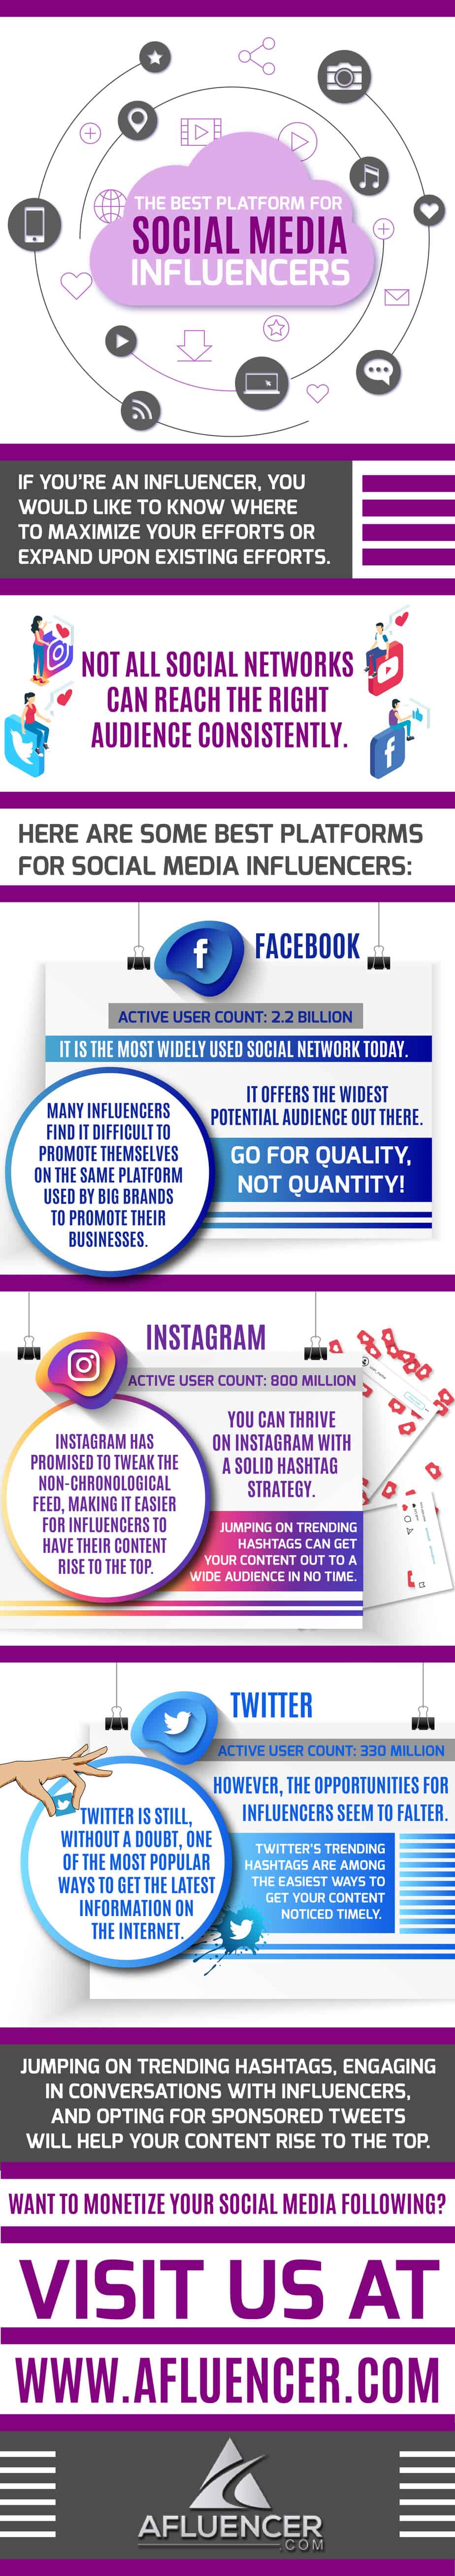 The Best Platform For Social Media Influencers - Infographic